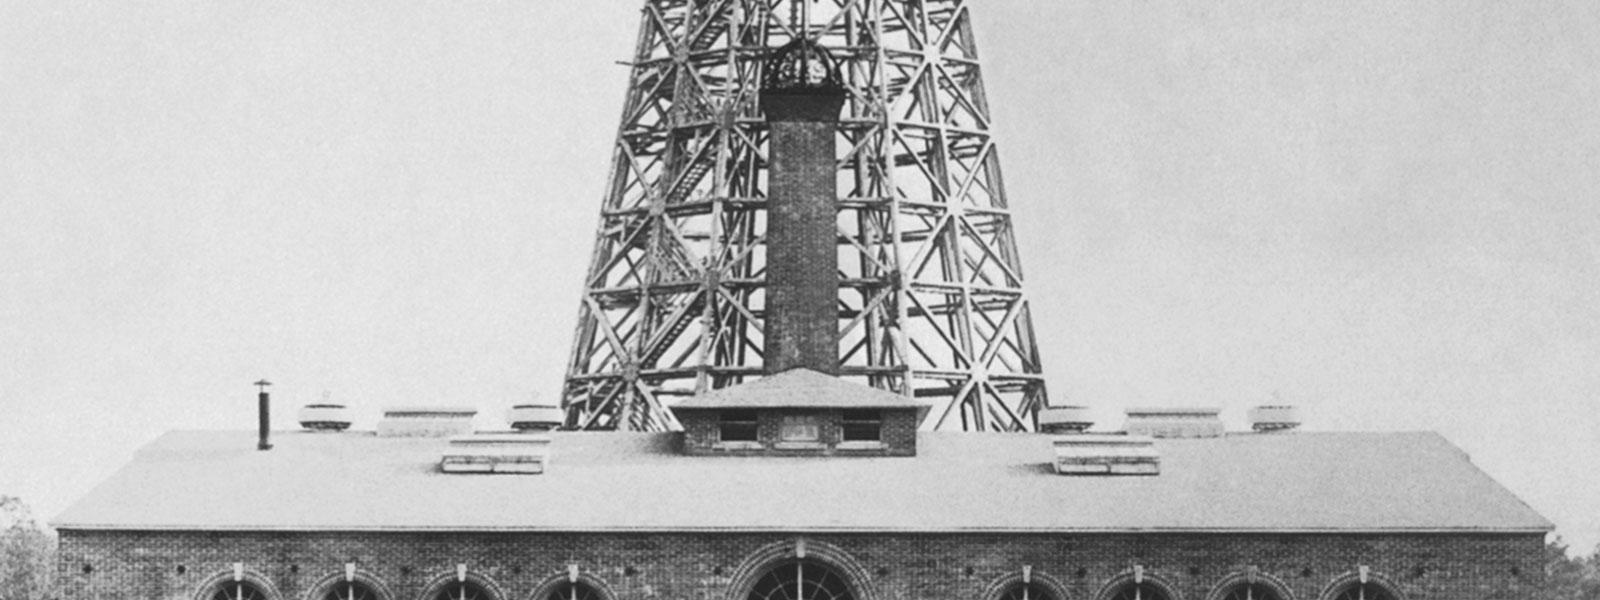 Tesla's Wardenclyffe Tower and Laboratory